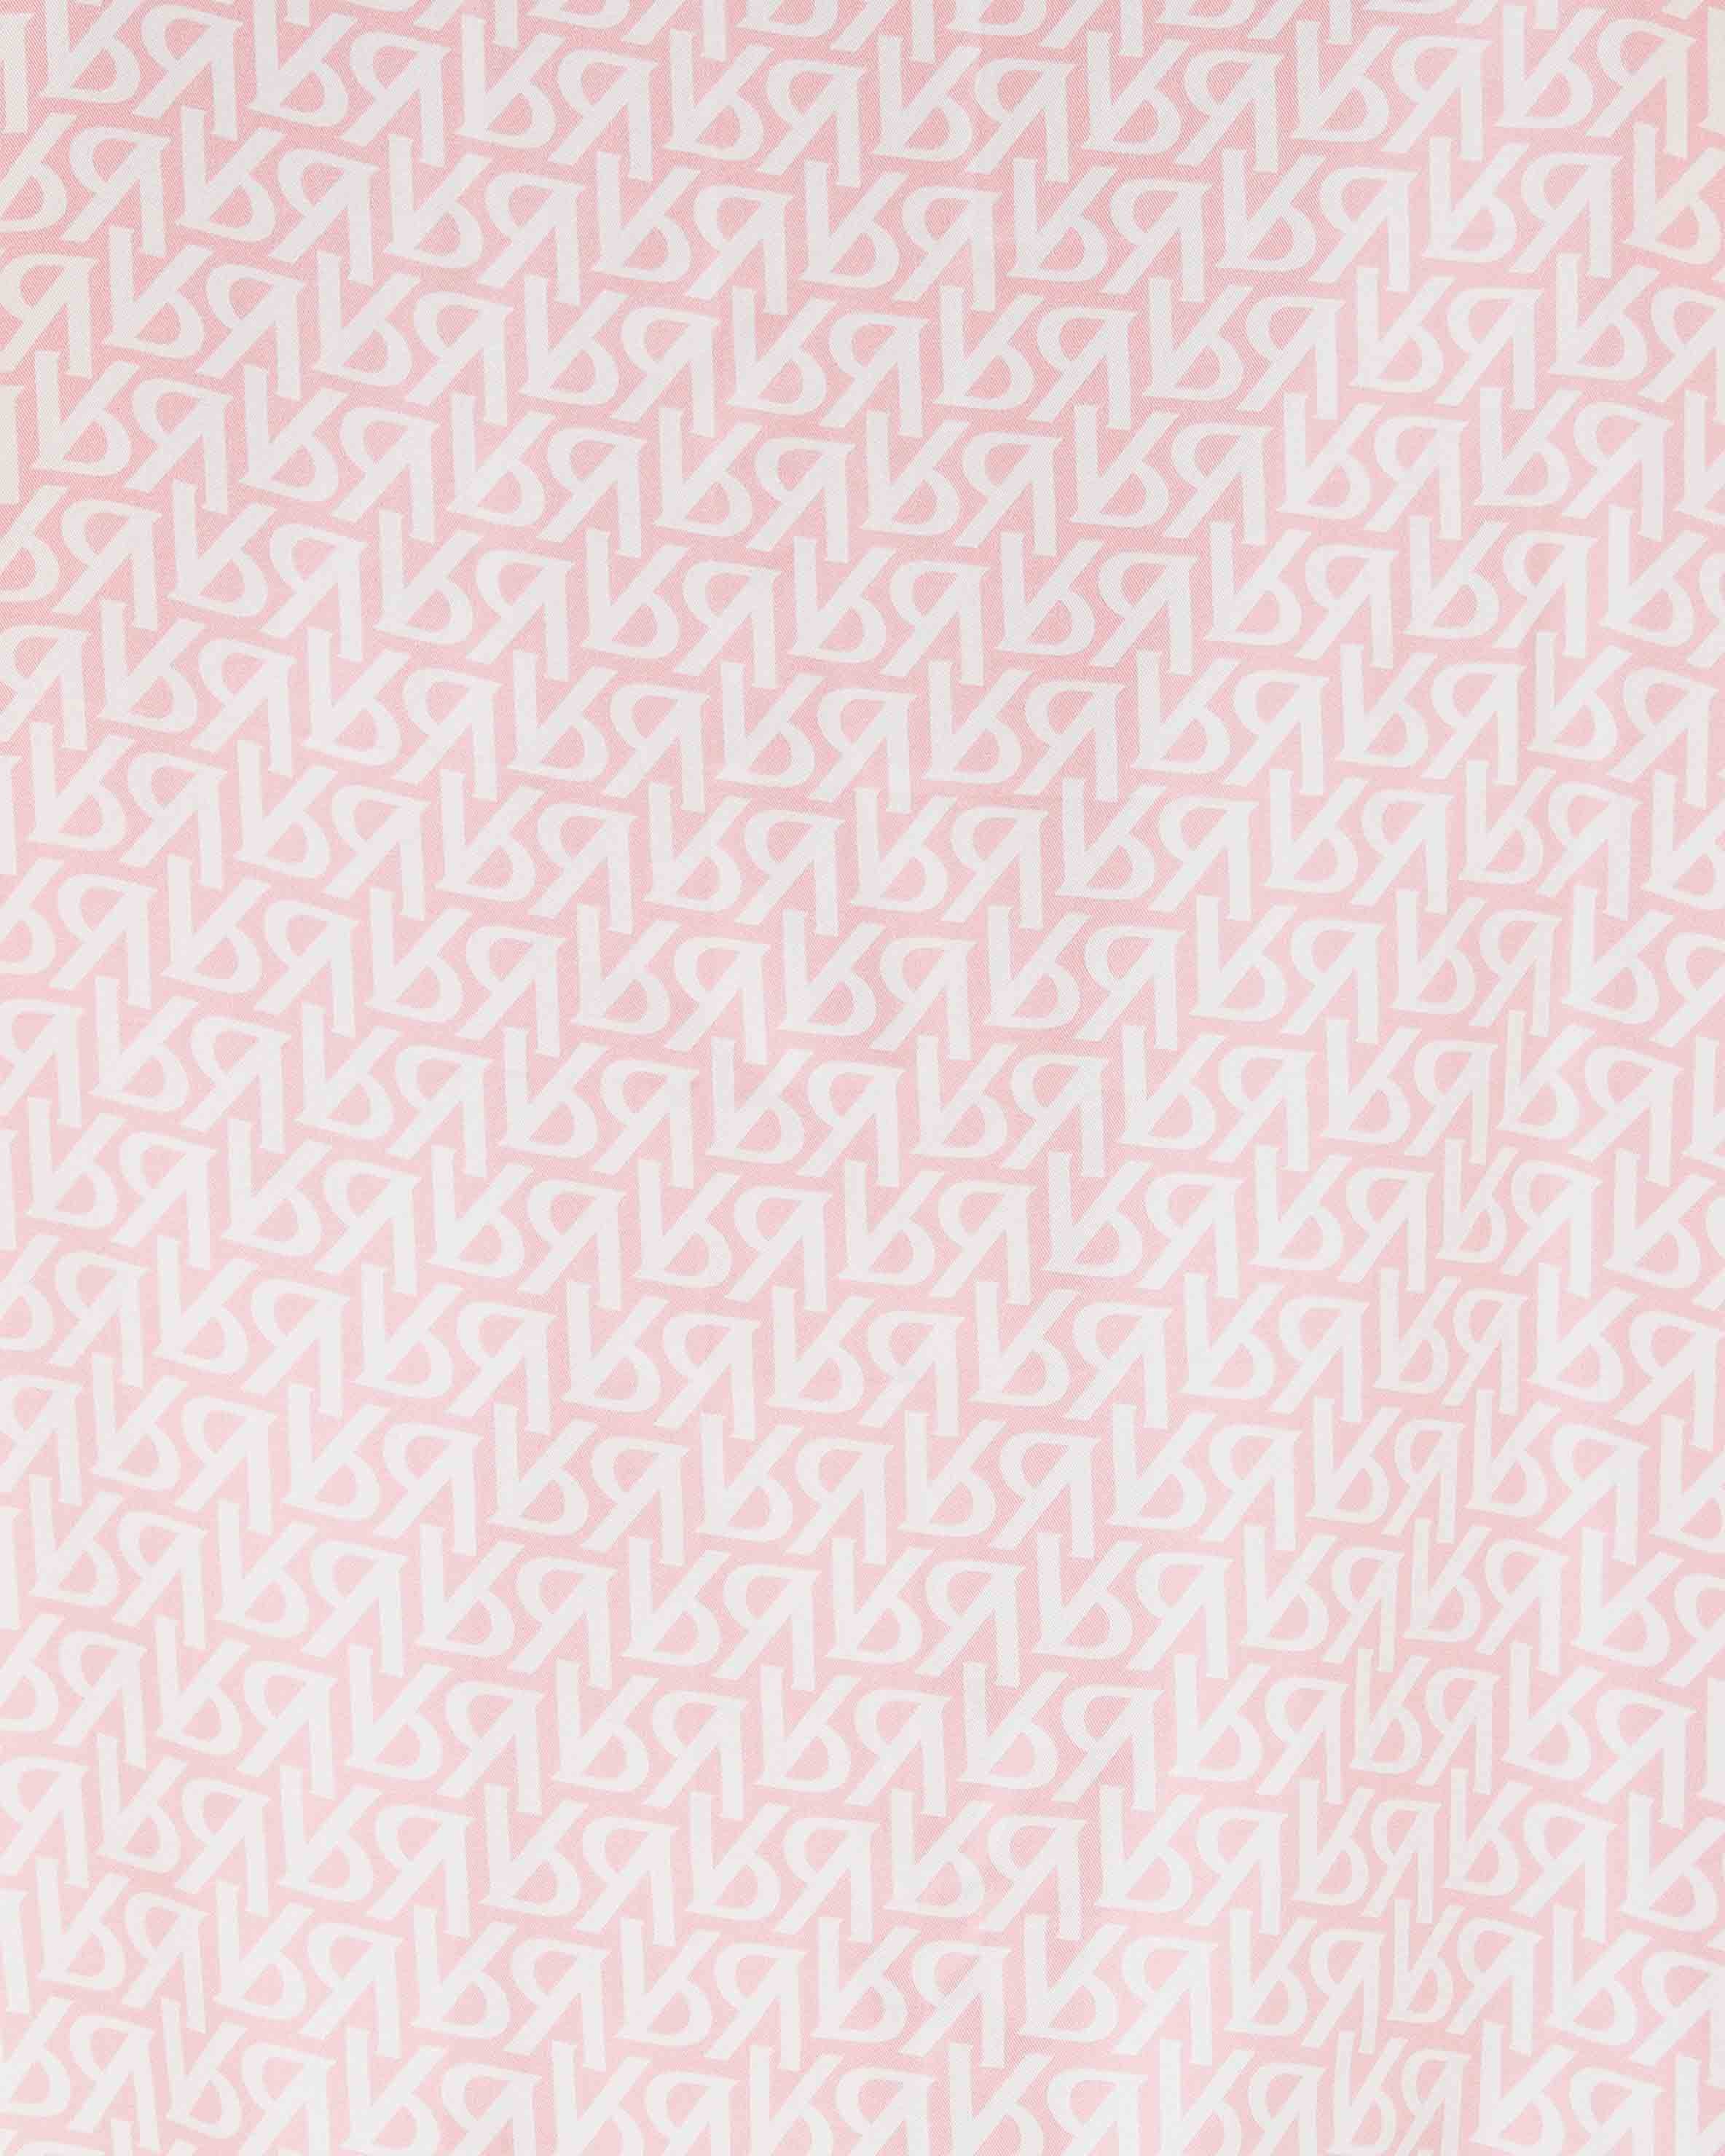 Initial Silk Bandana - Pink